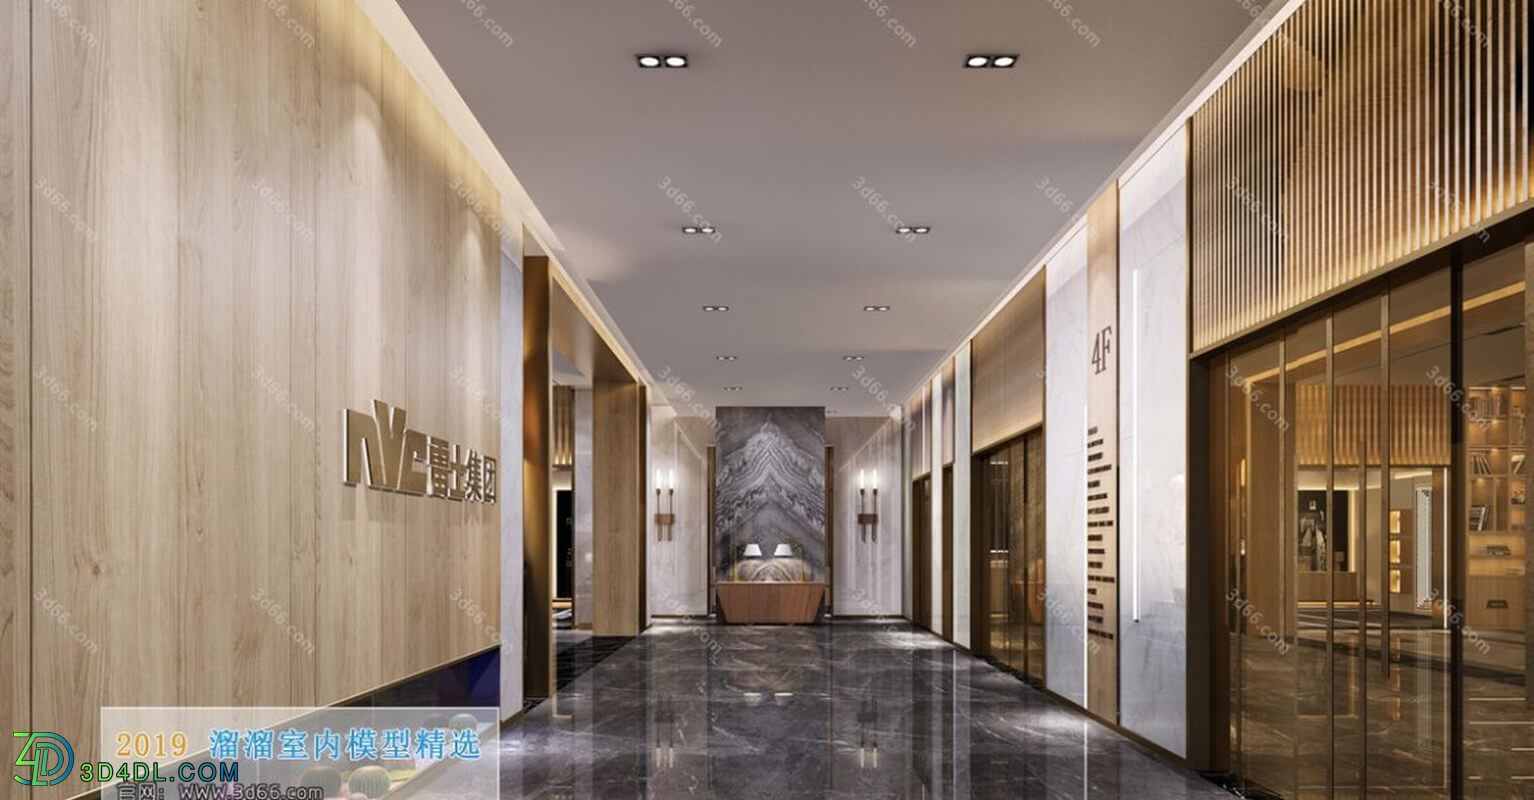 3D66 2019 Elevator Lobby & Aisle (001)